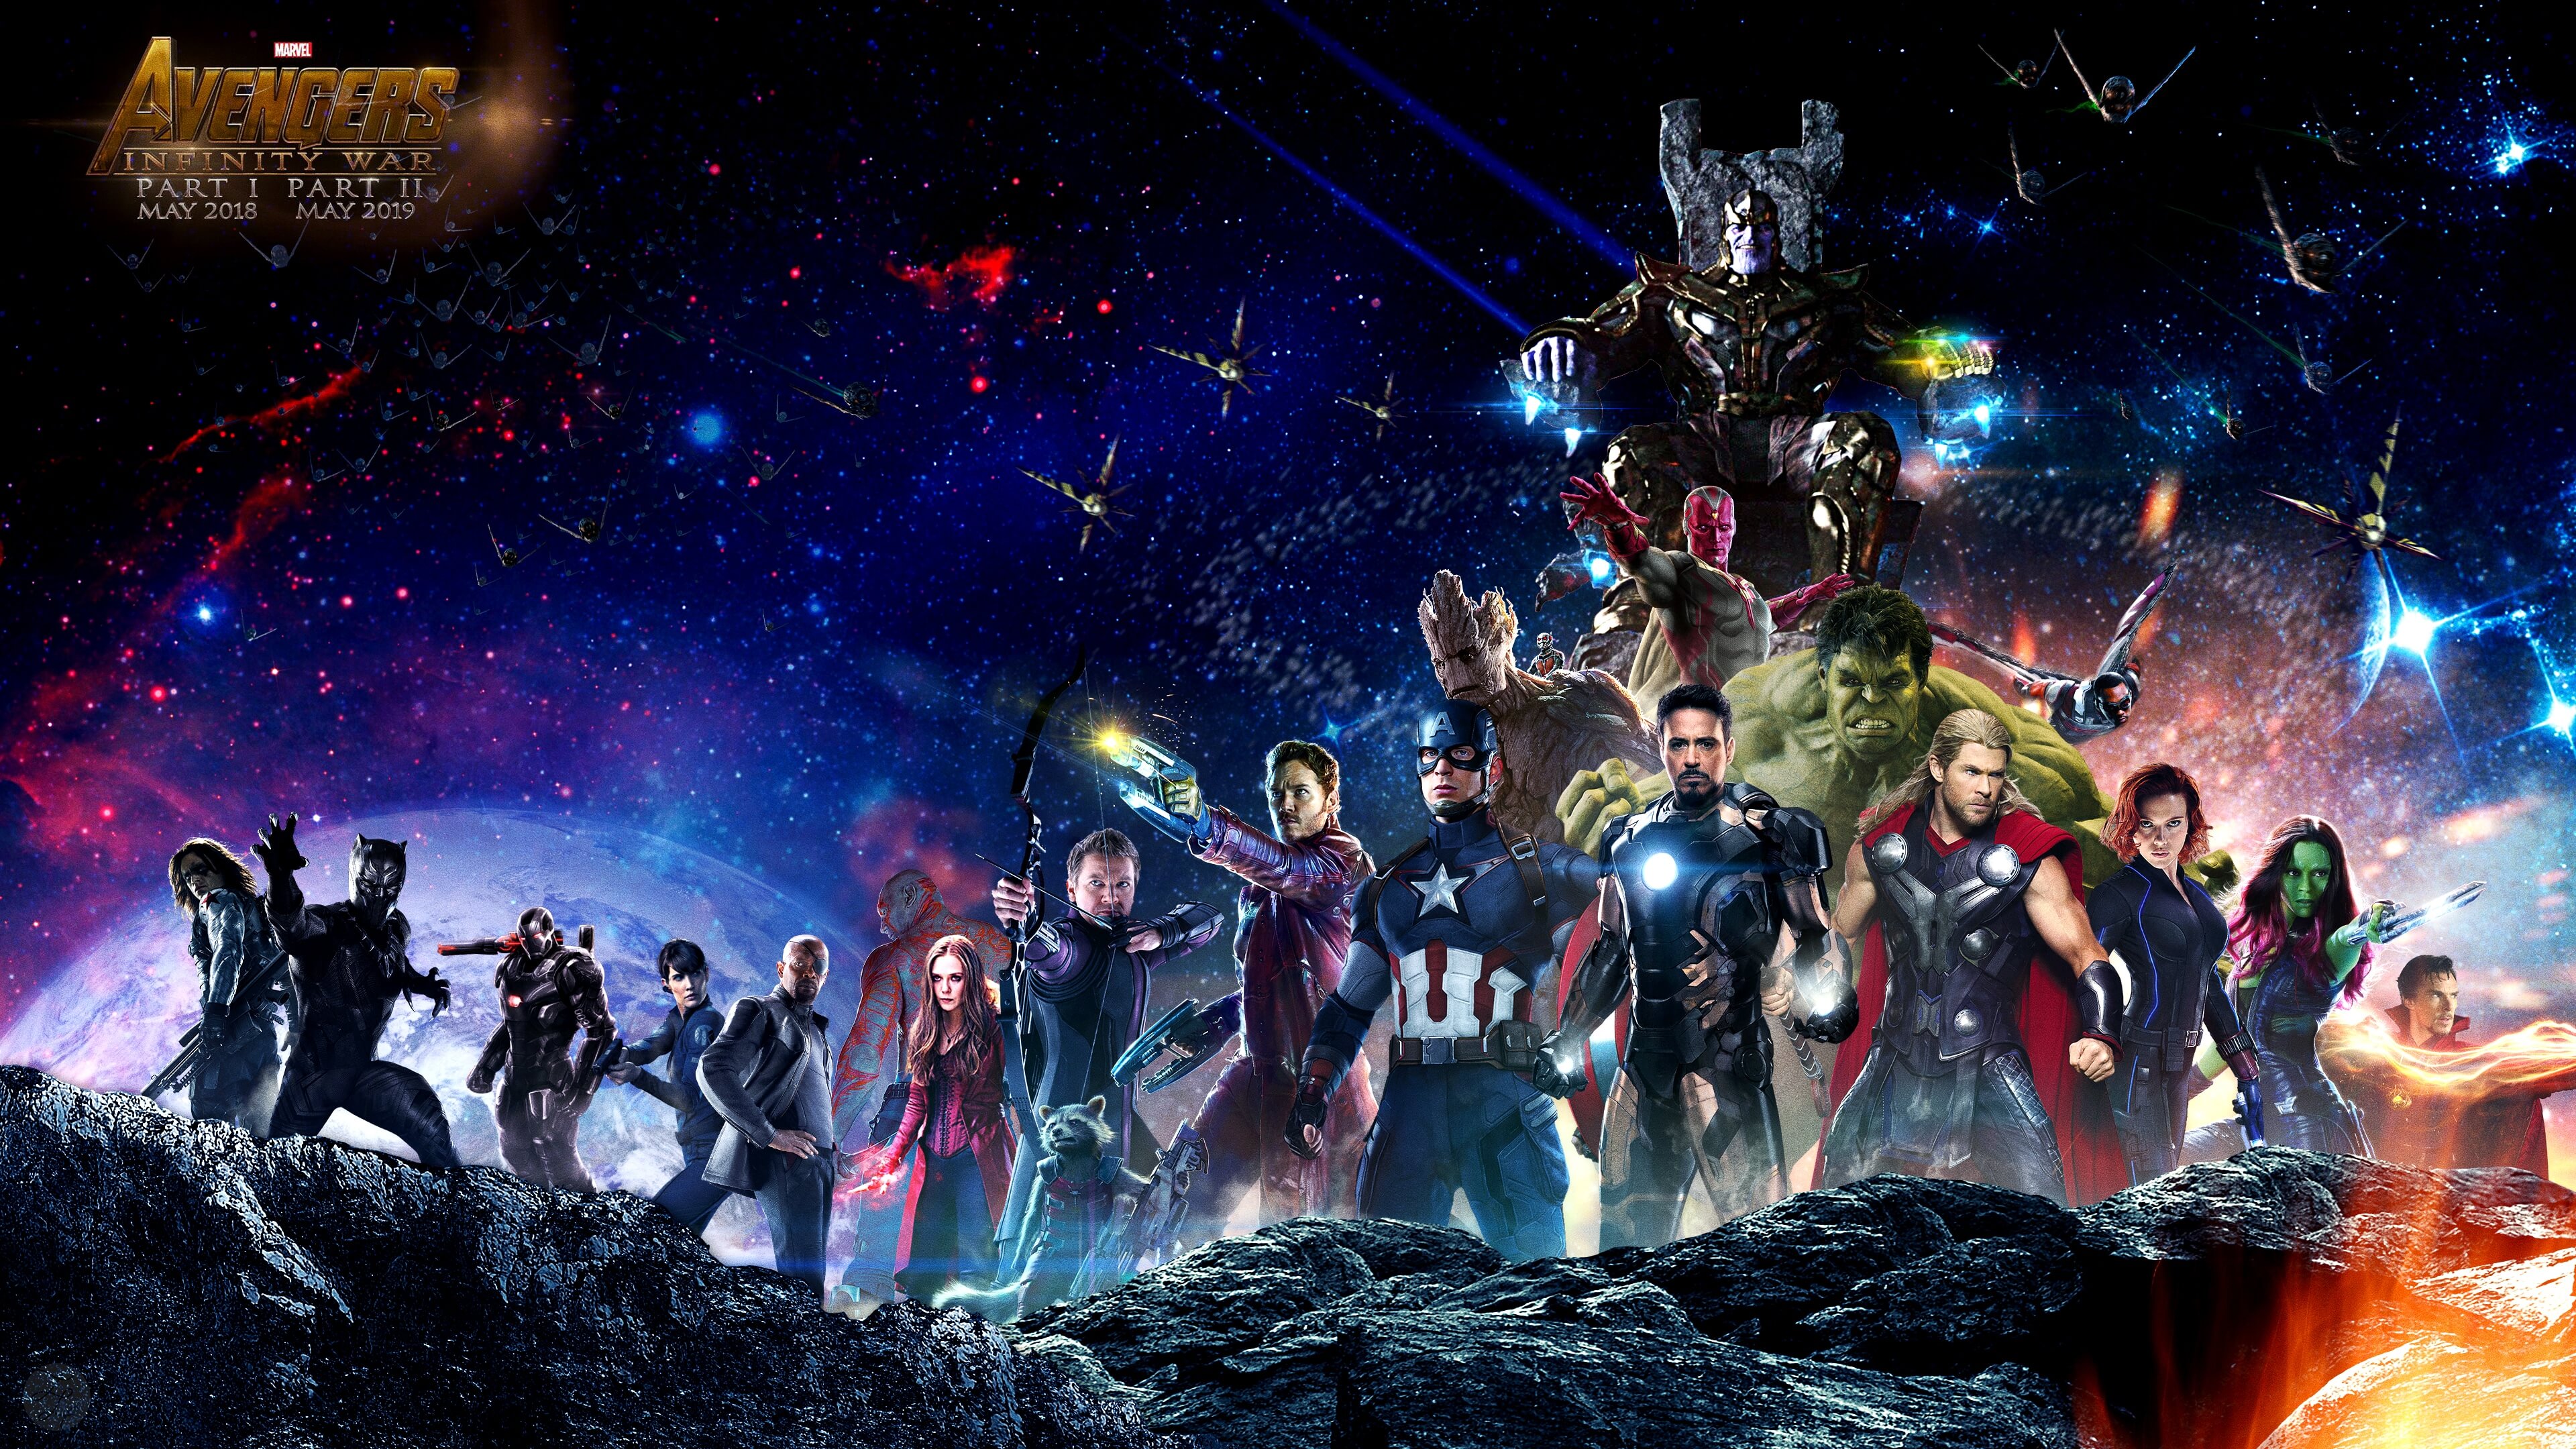 Avengers Infinity War 4K Desktop Wallpaper 917 3840x2160 px